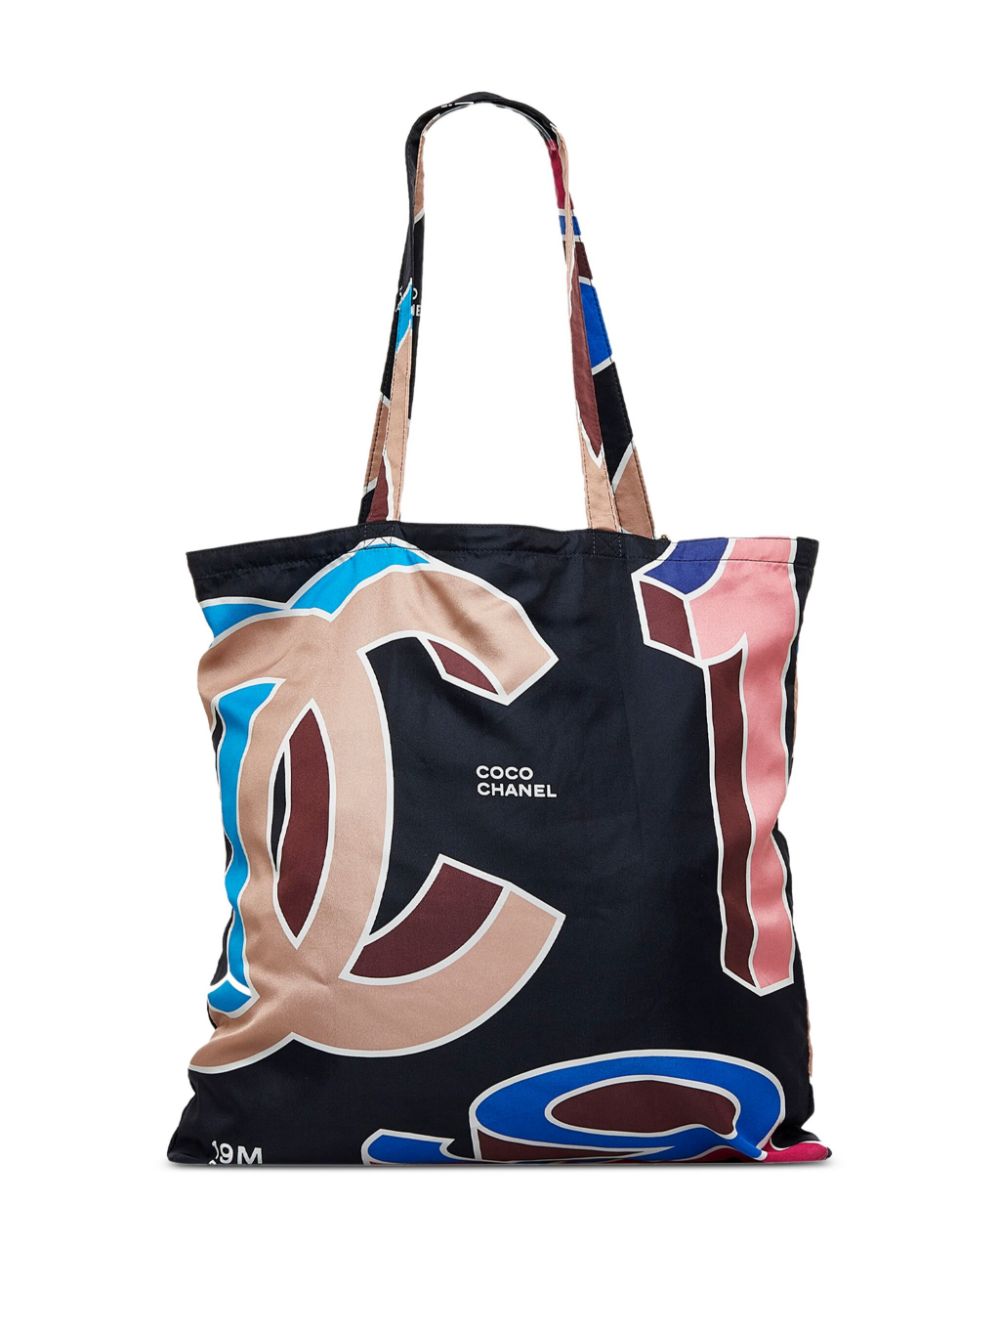 Chanel Logo Bag 